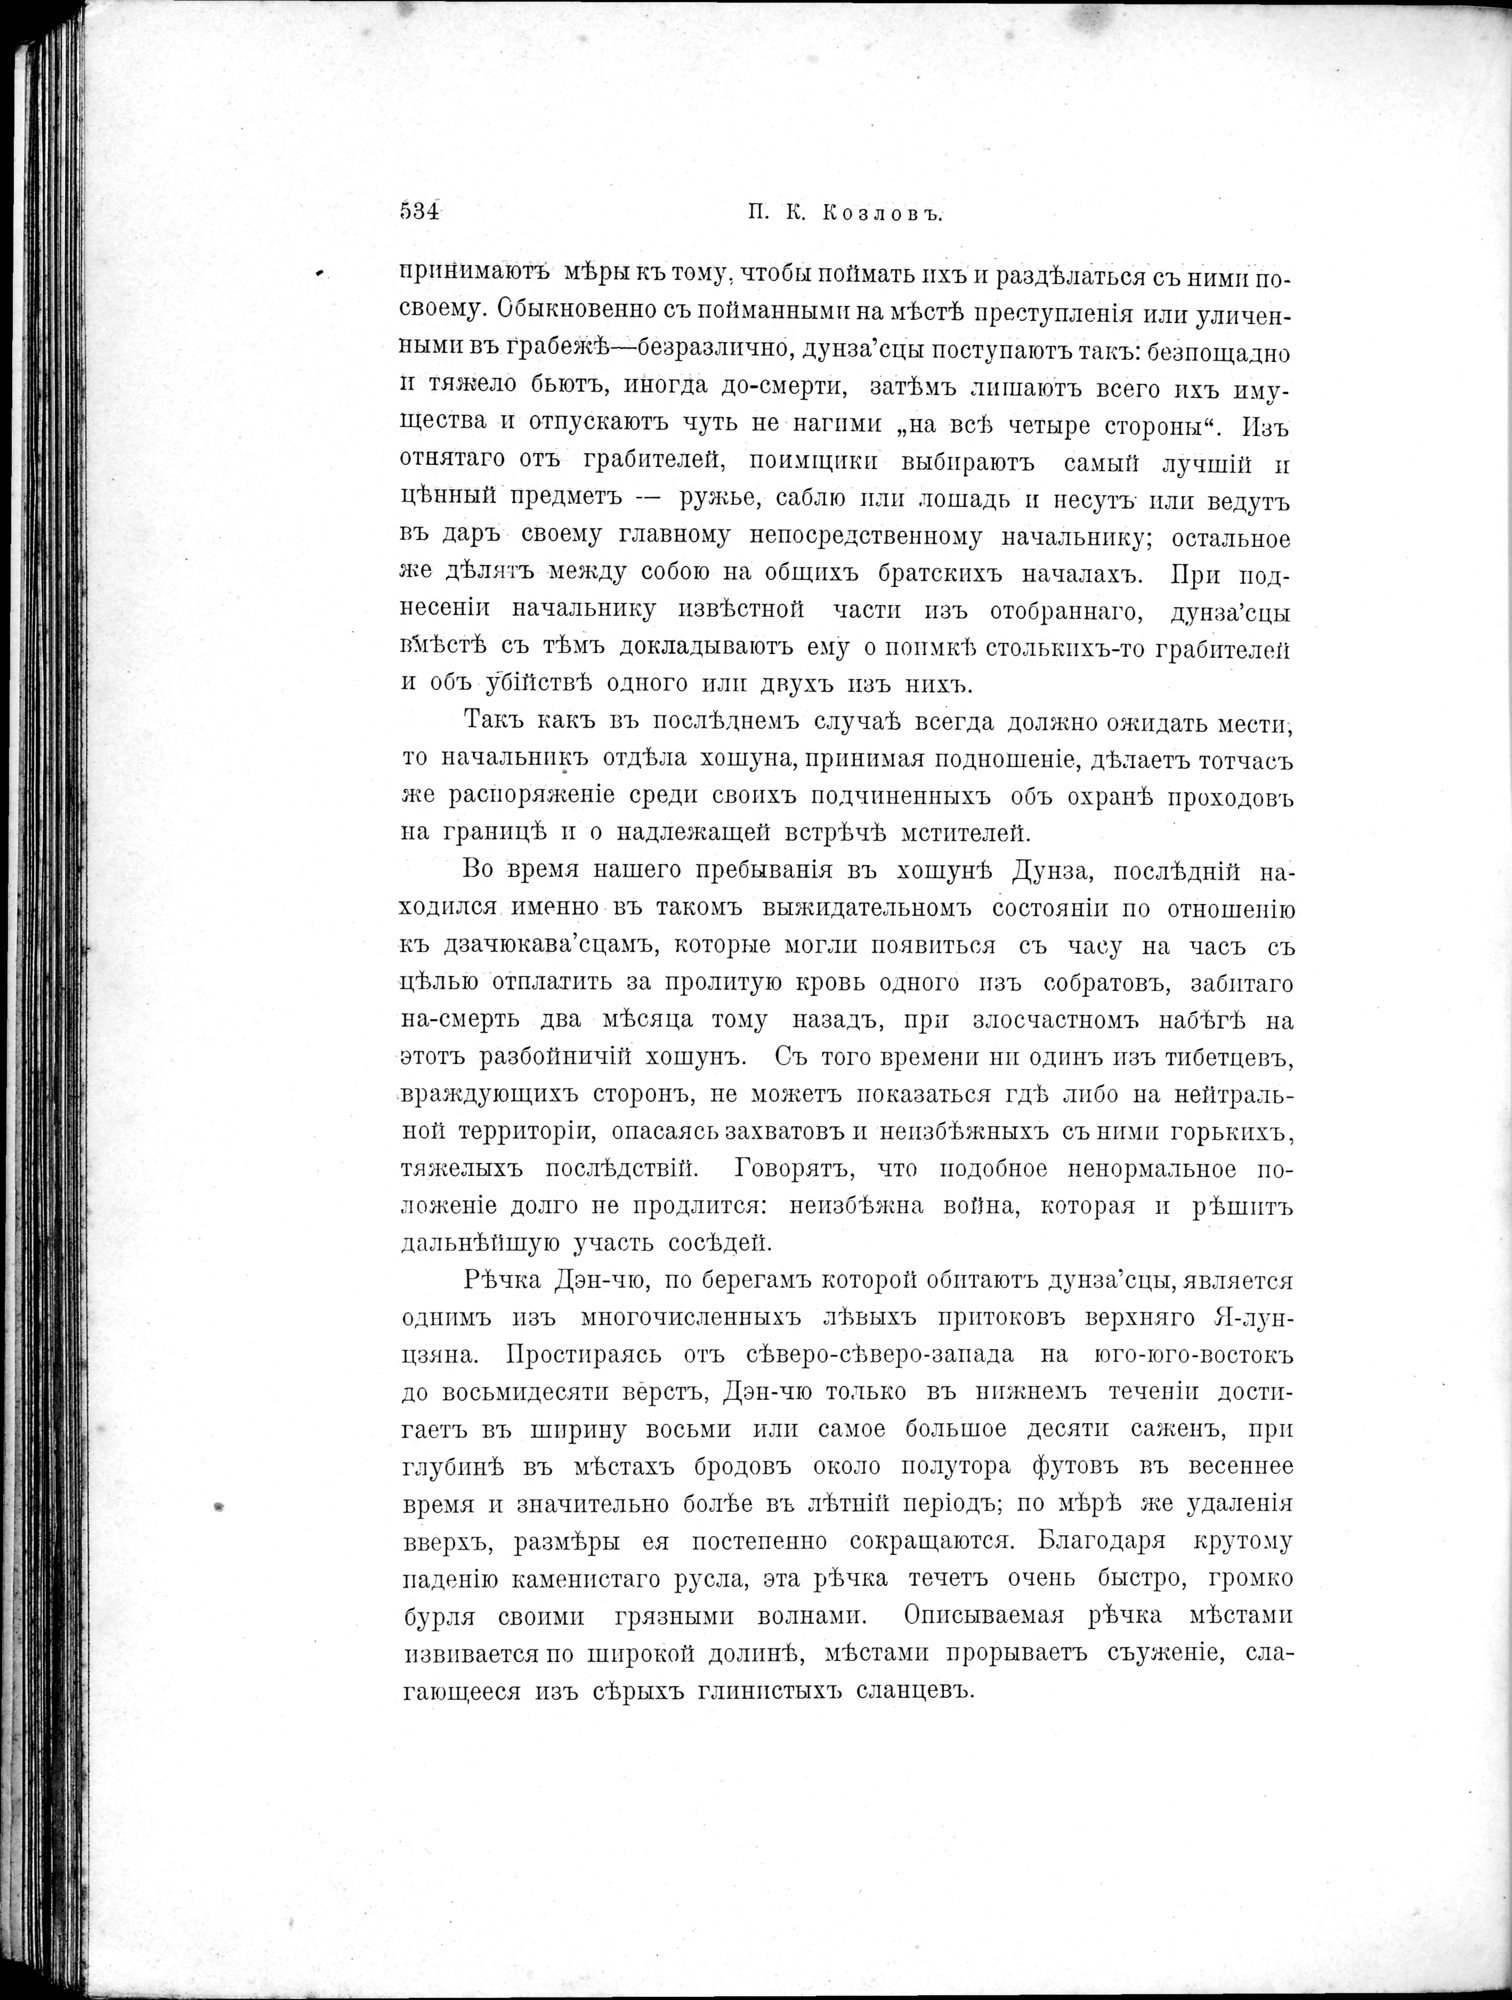 Mongoliia i Kam : vol.2 / Page 354 (Grayscale High Resolution Image)